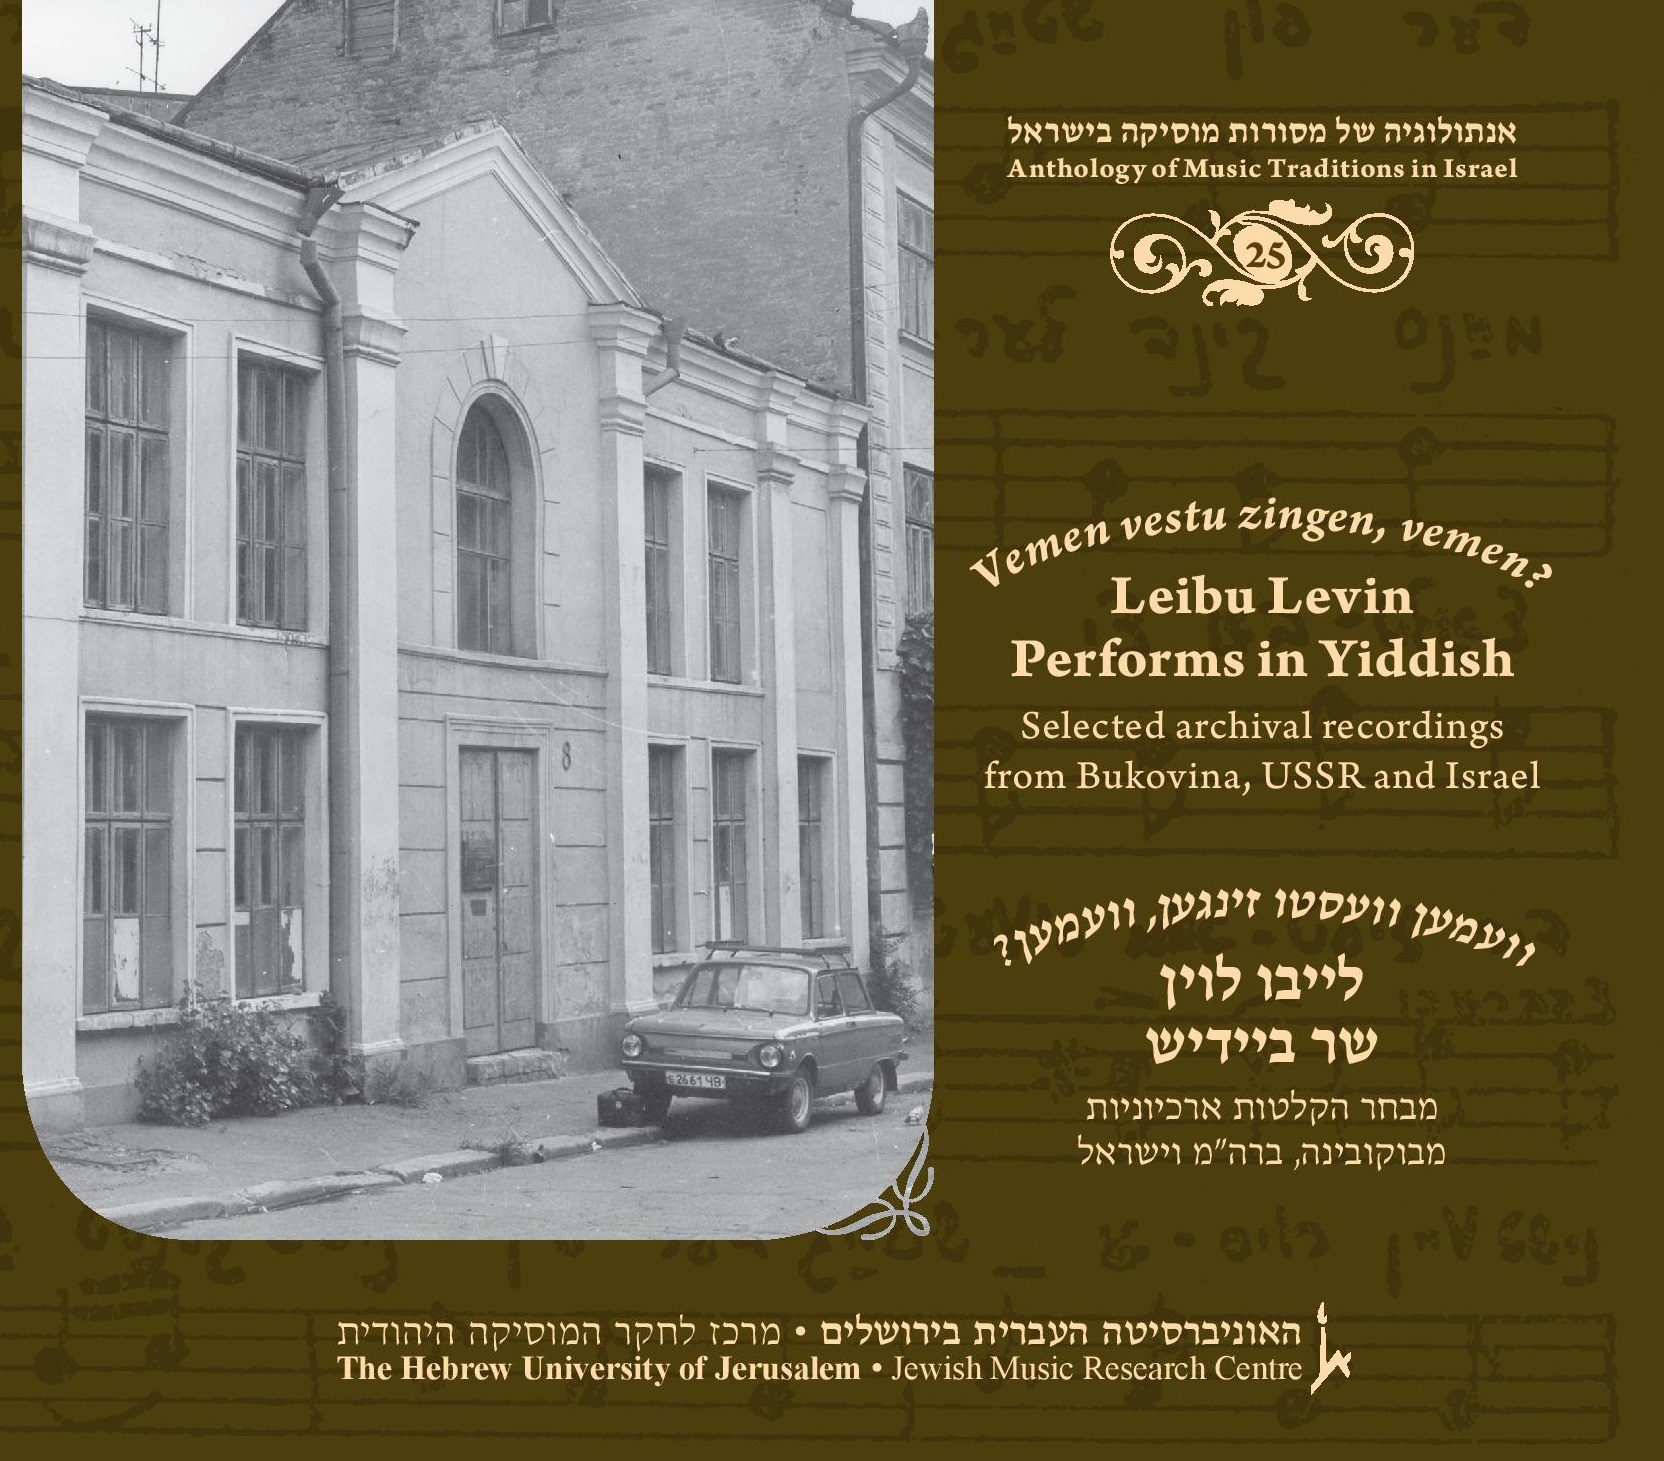 Vemen vestu zingen, vemen? Leibu Levin Performs in Yiddish